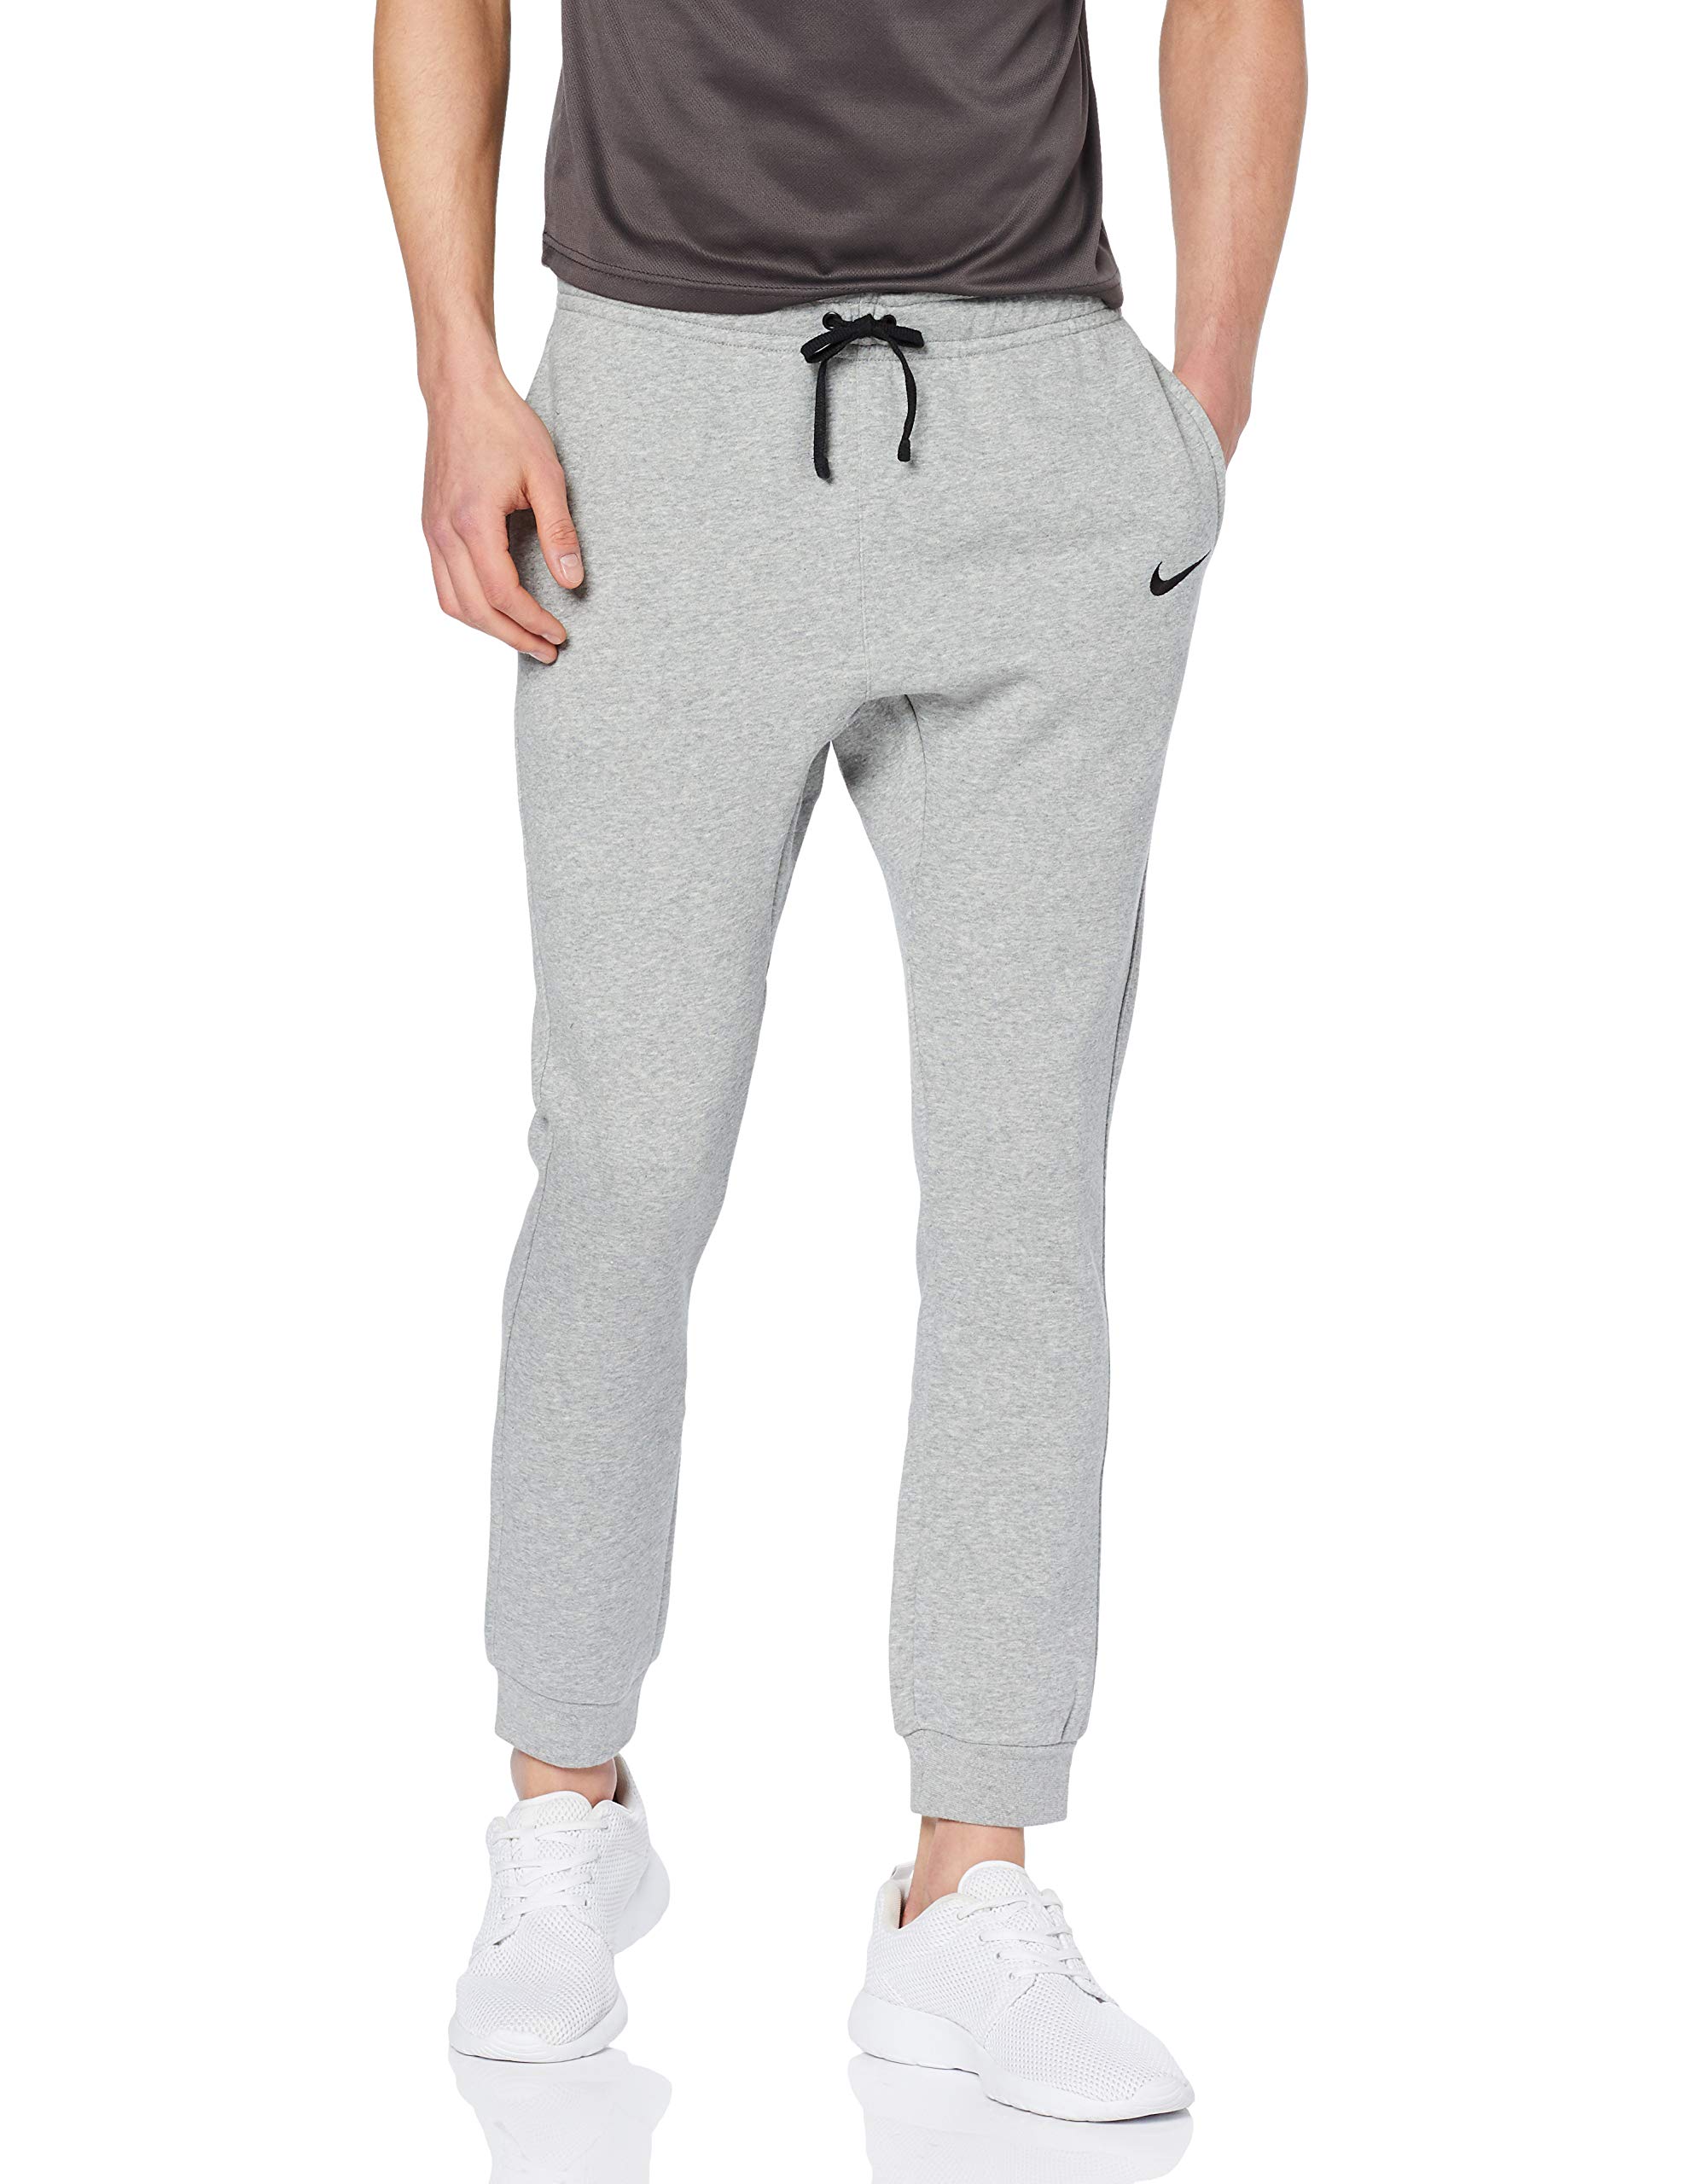 Nike Men's Team Club 19 Fleece Pants | eBay